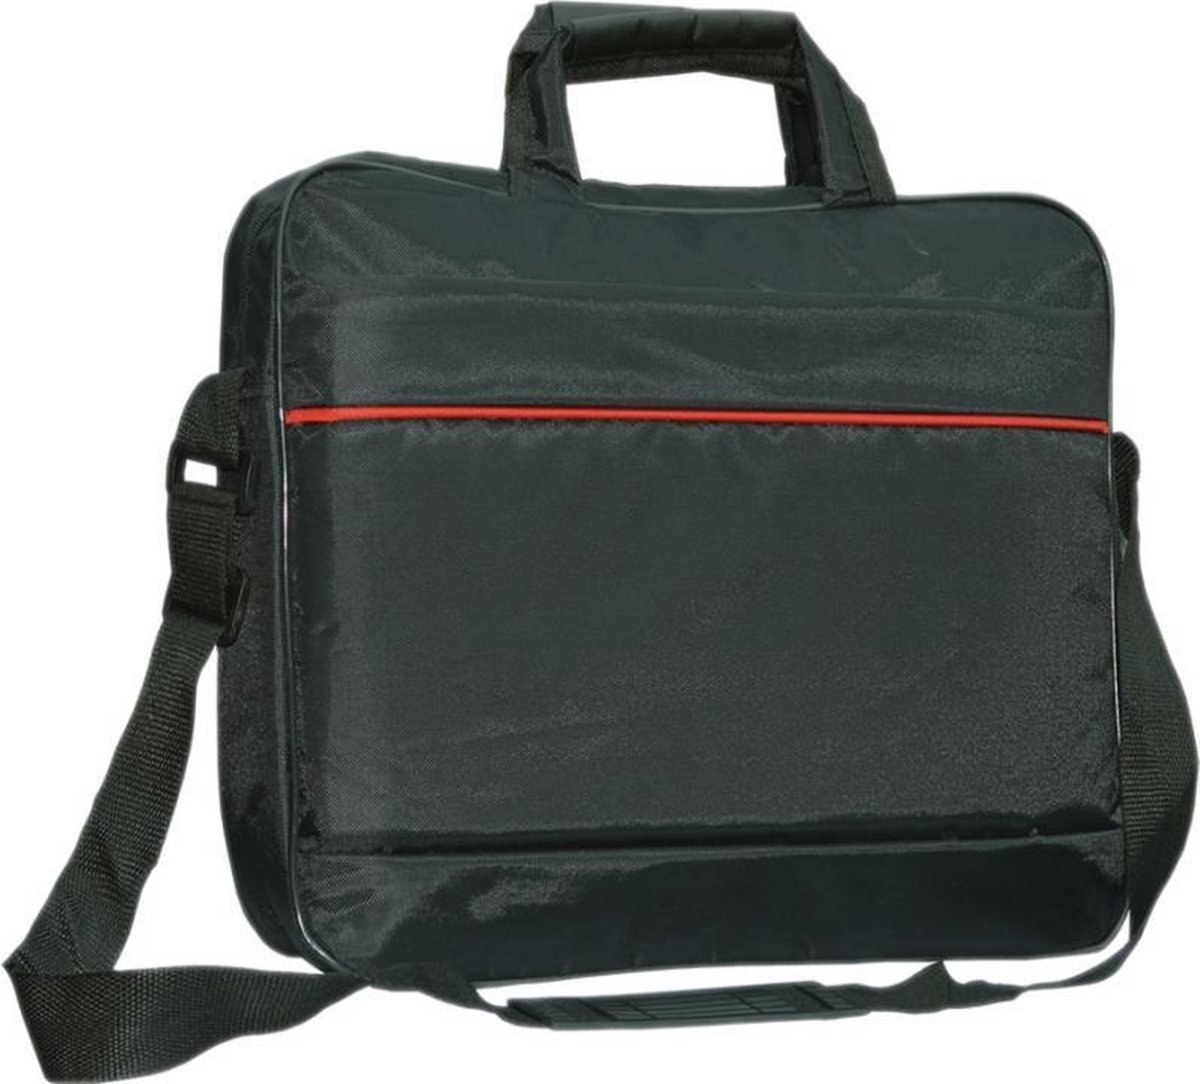 Sony Vaio Fit Multiflip 13a laptoptas messenger bag / schoudertas / tas , zwart , merk i12Cover